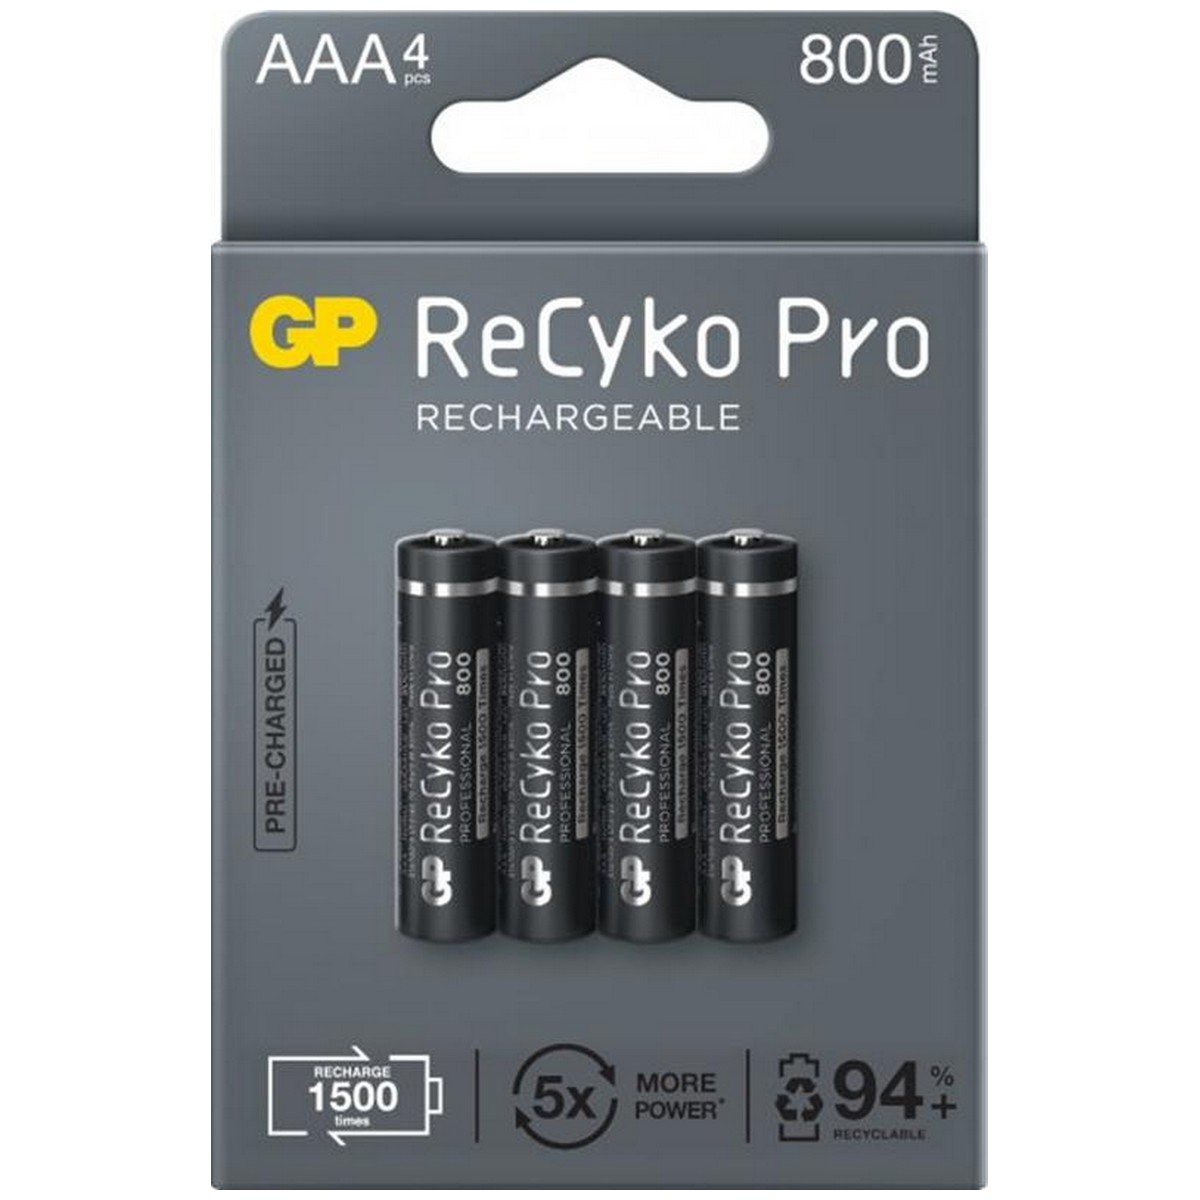 Аккумуляторы GP Recyko Pro 800 AAA/HR03 NI-MH 800mAh BL 4 шт